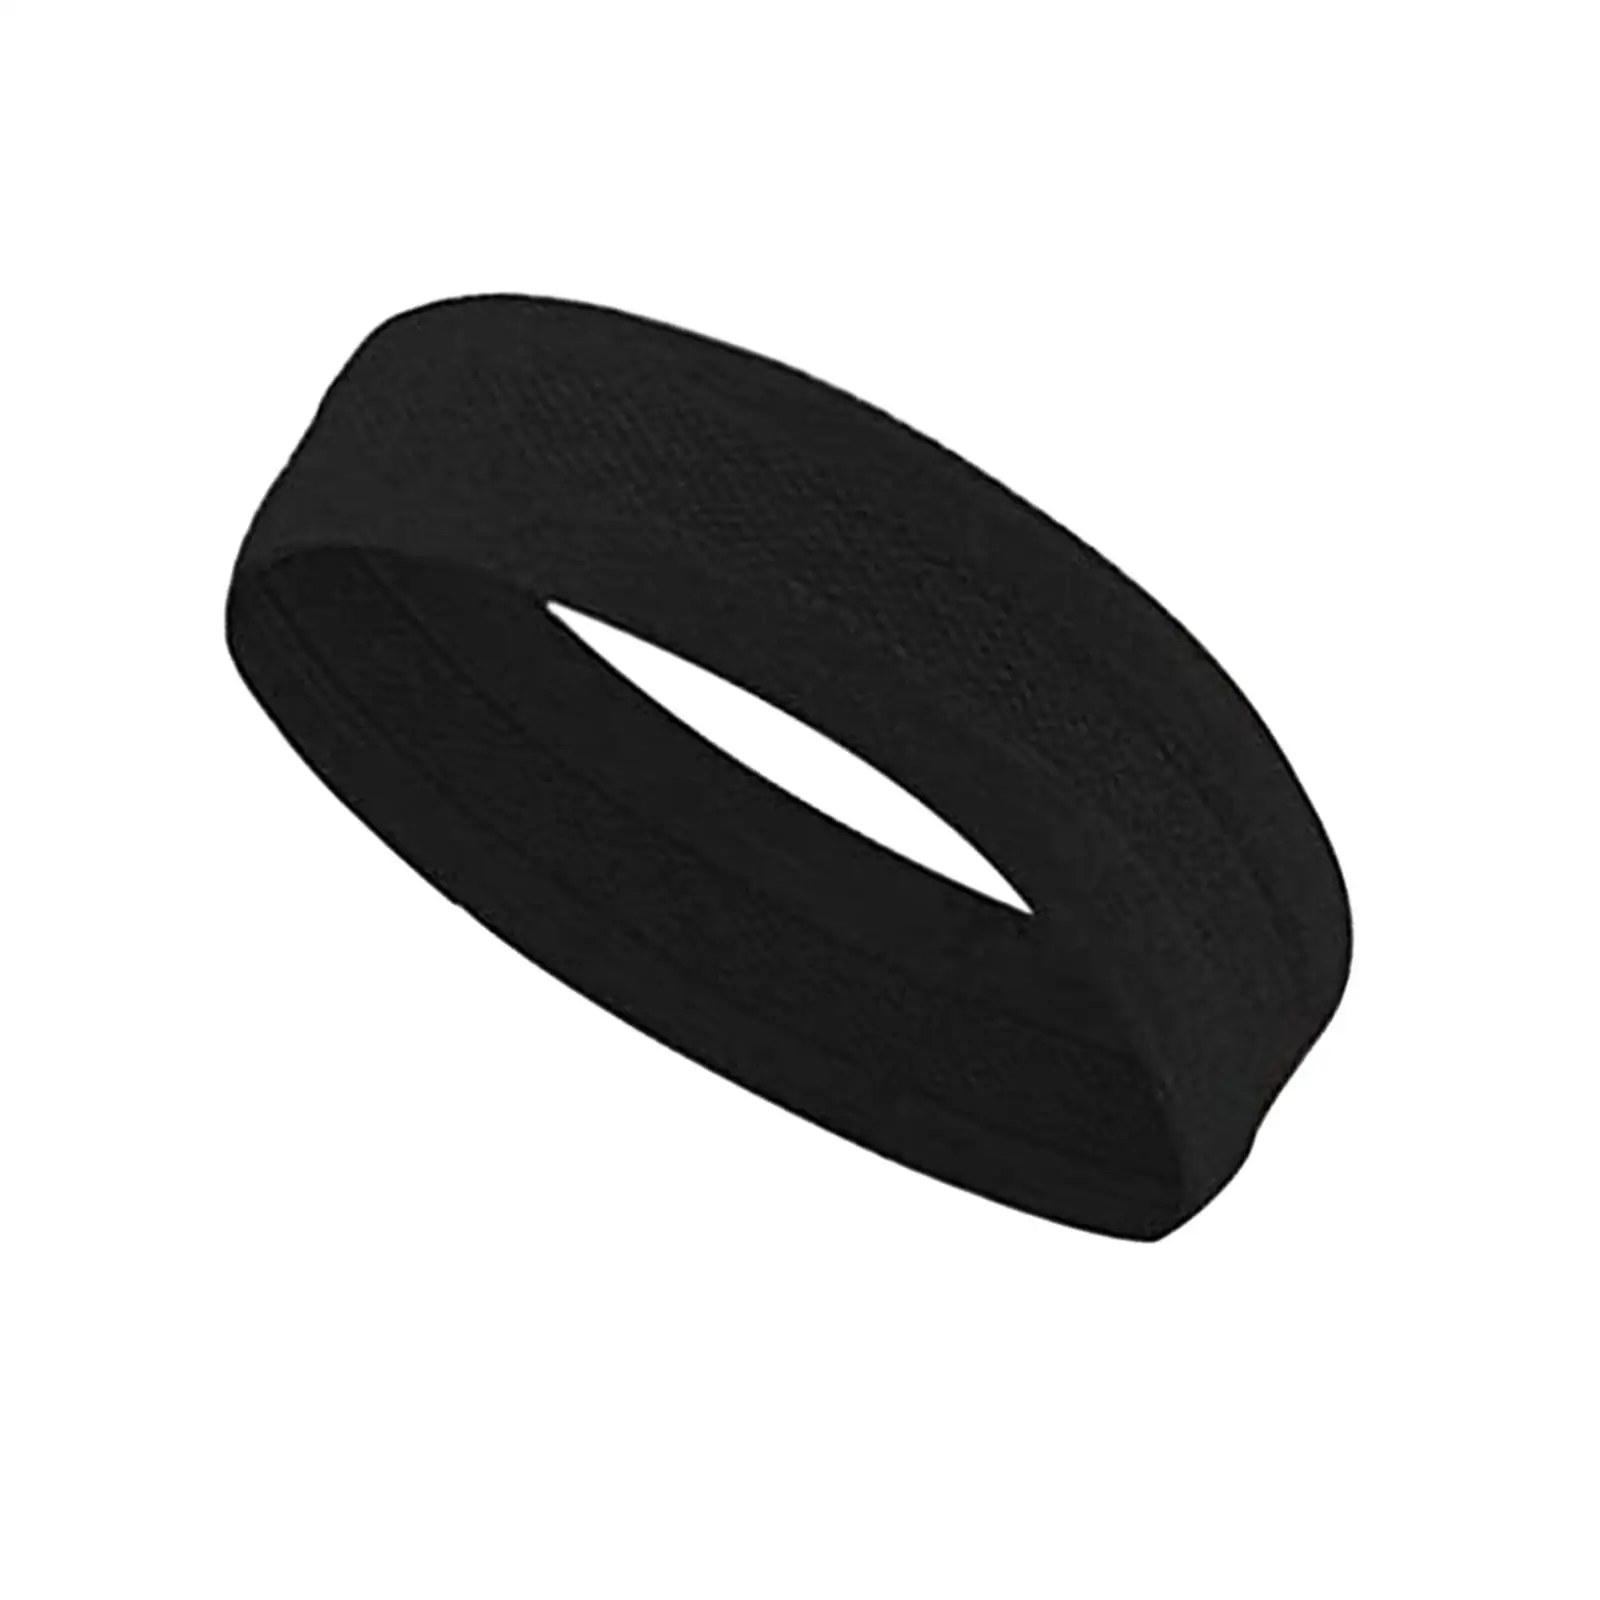 Sports Headbands Hair Band Stretch Belt Non Slip Elastic Sweatband for Running Riding Mountaineering Cross Training